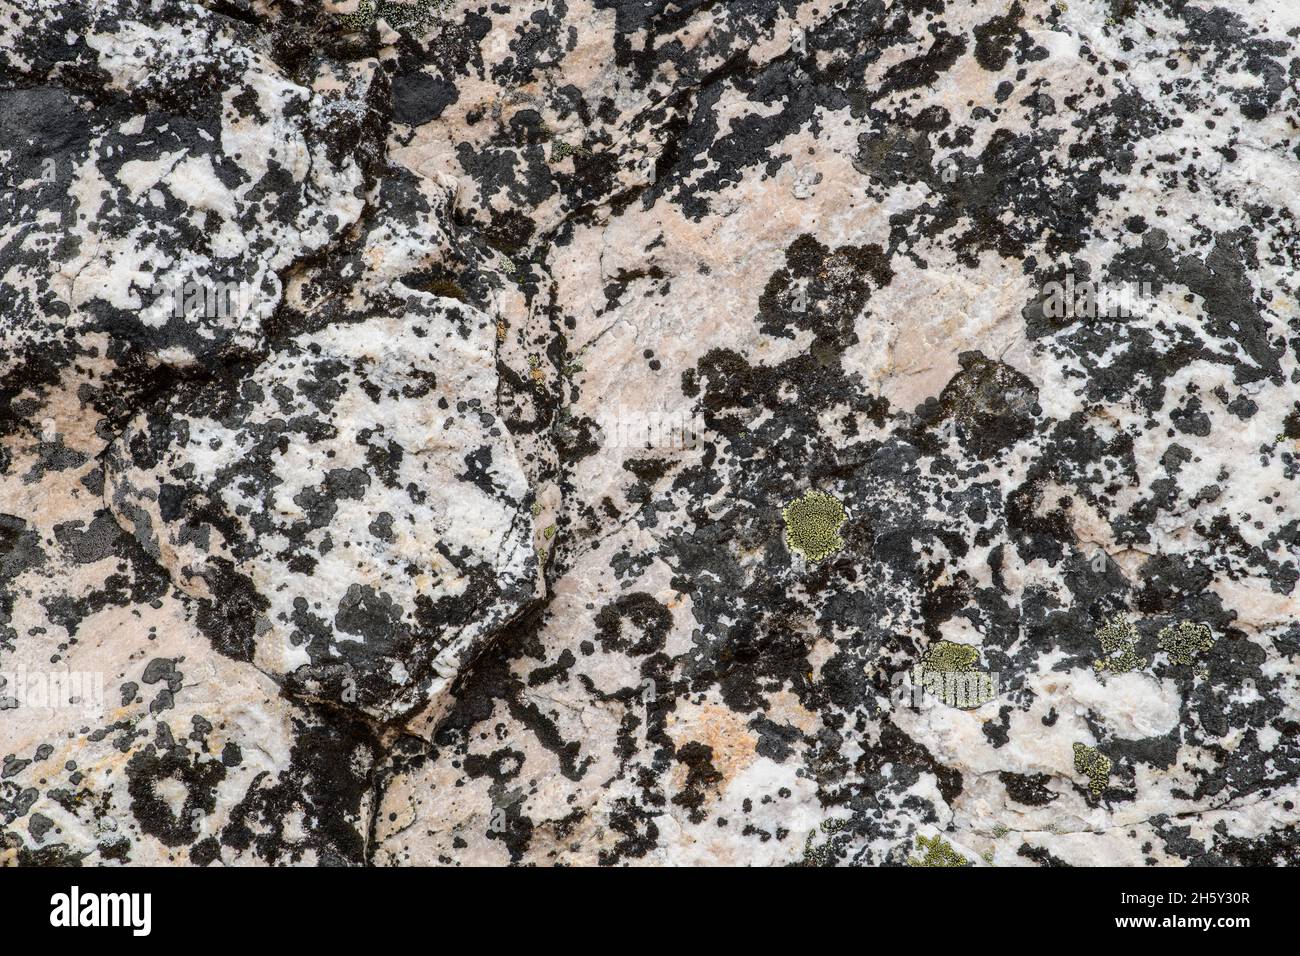 Lichen covered boulders in a rock slide, Jasper National Park, Alberta, Canada Stock Photo